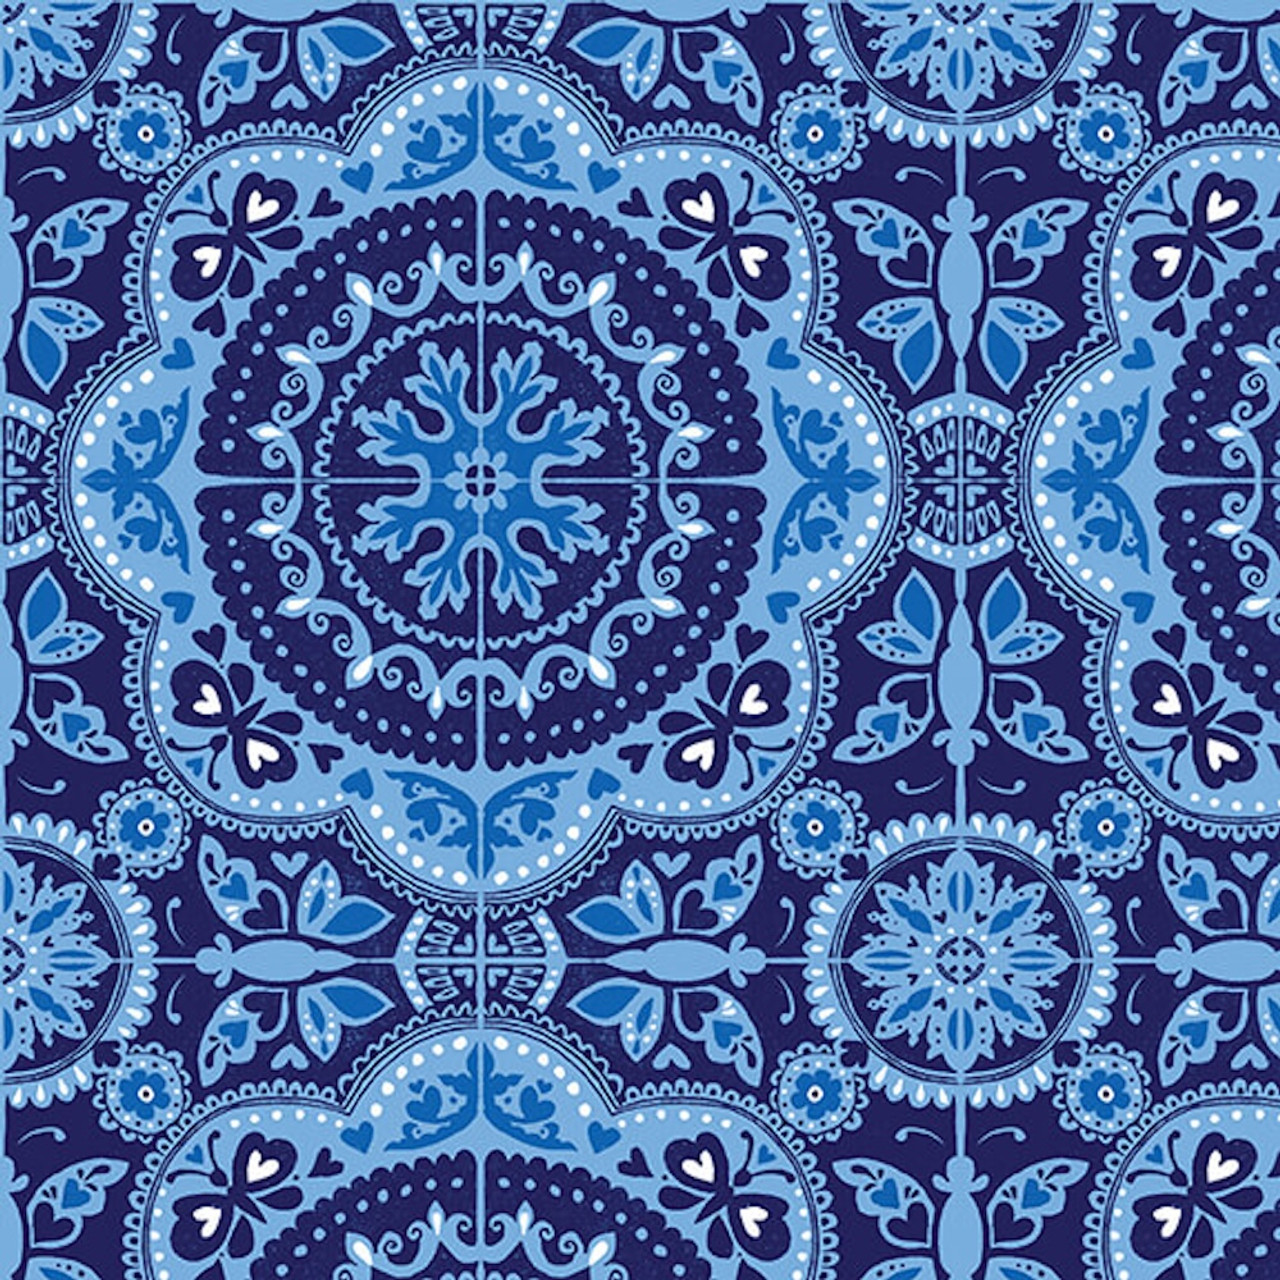 Studio E Blue Dreams Medium Mosaic Navy Cotton Fabric By Yard